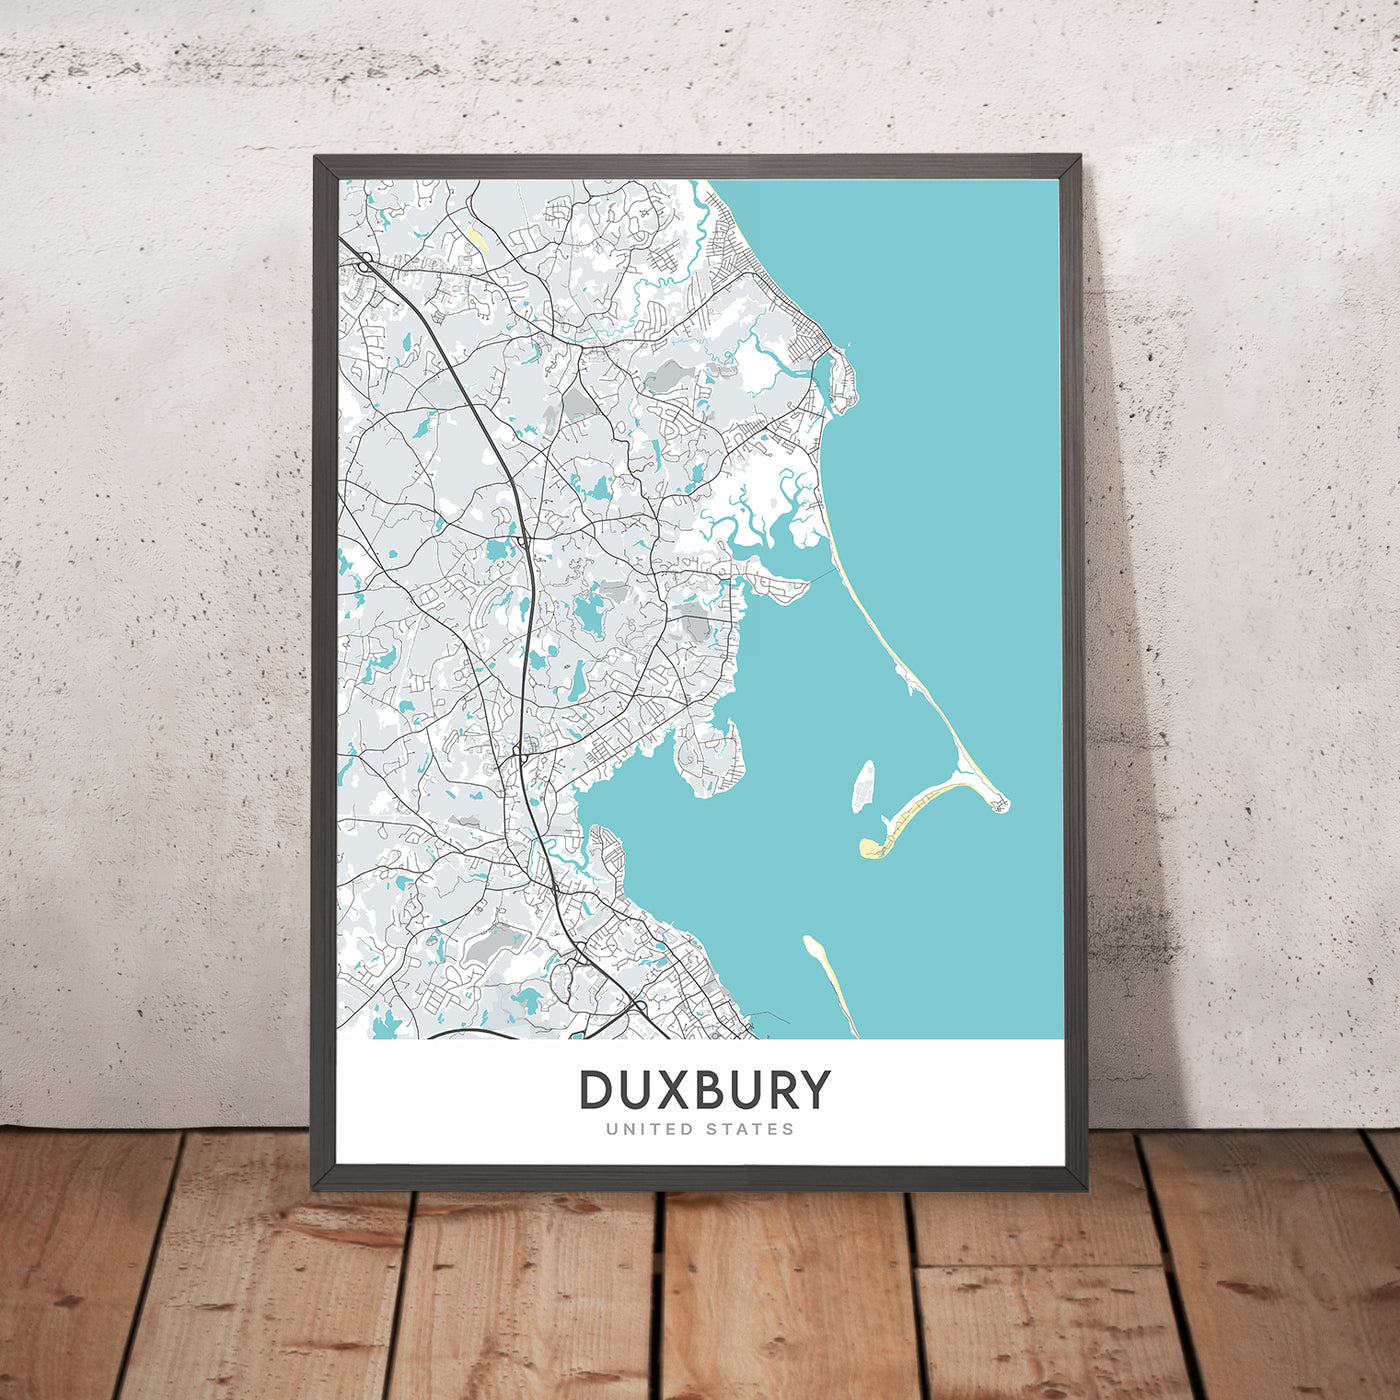 Plan de la ville moderne de Duxbury, MA : Duxbury Beach, Duxbury Yacht Club, Gurnet Point, Myles Standish Monument, Powder Point Bridge